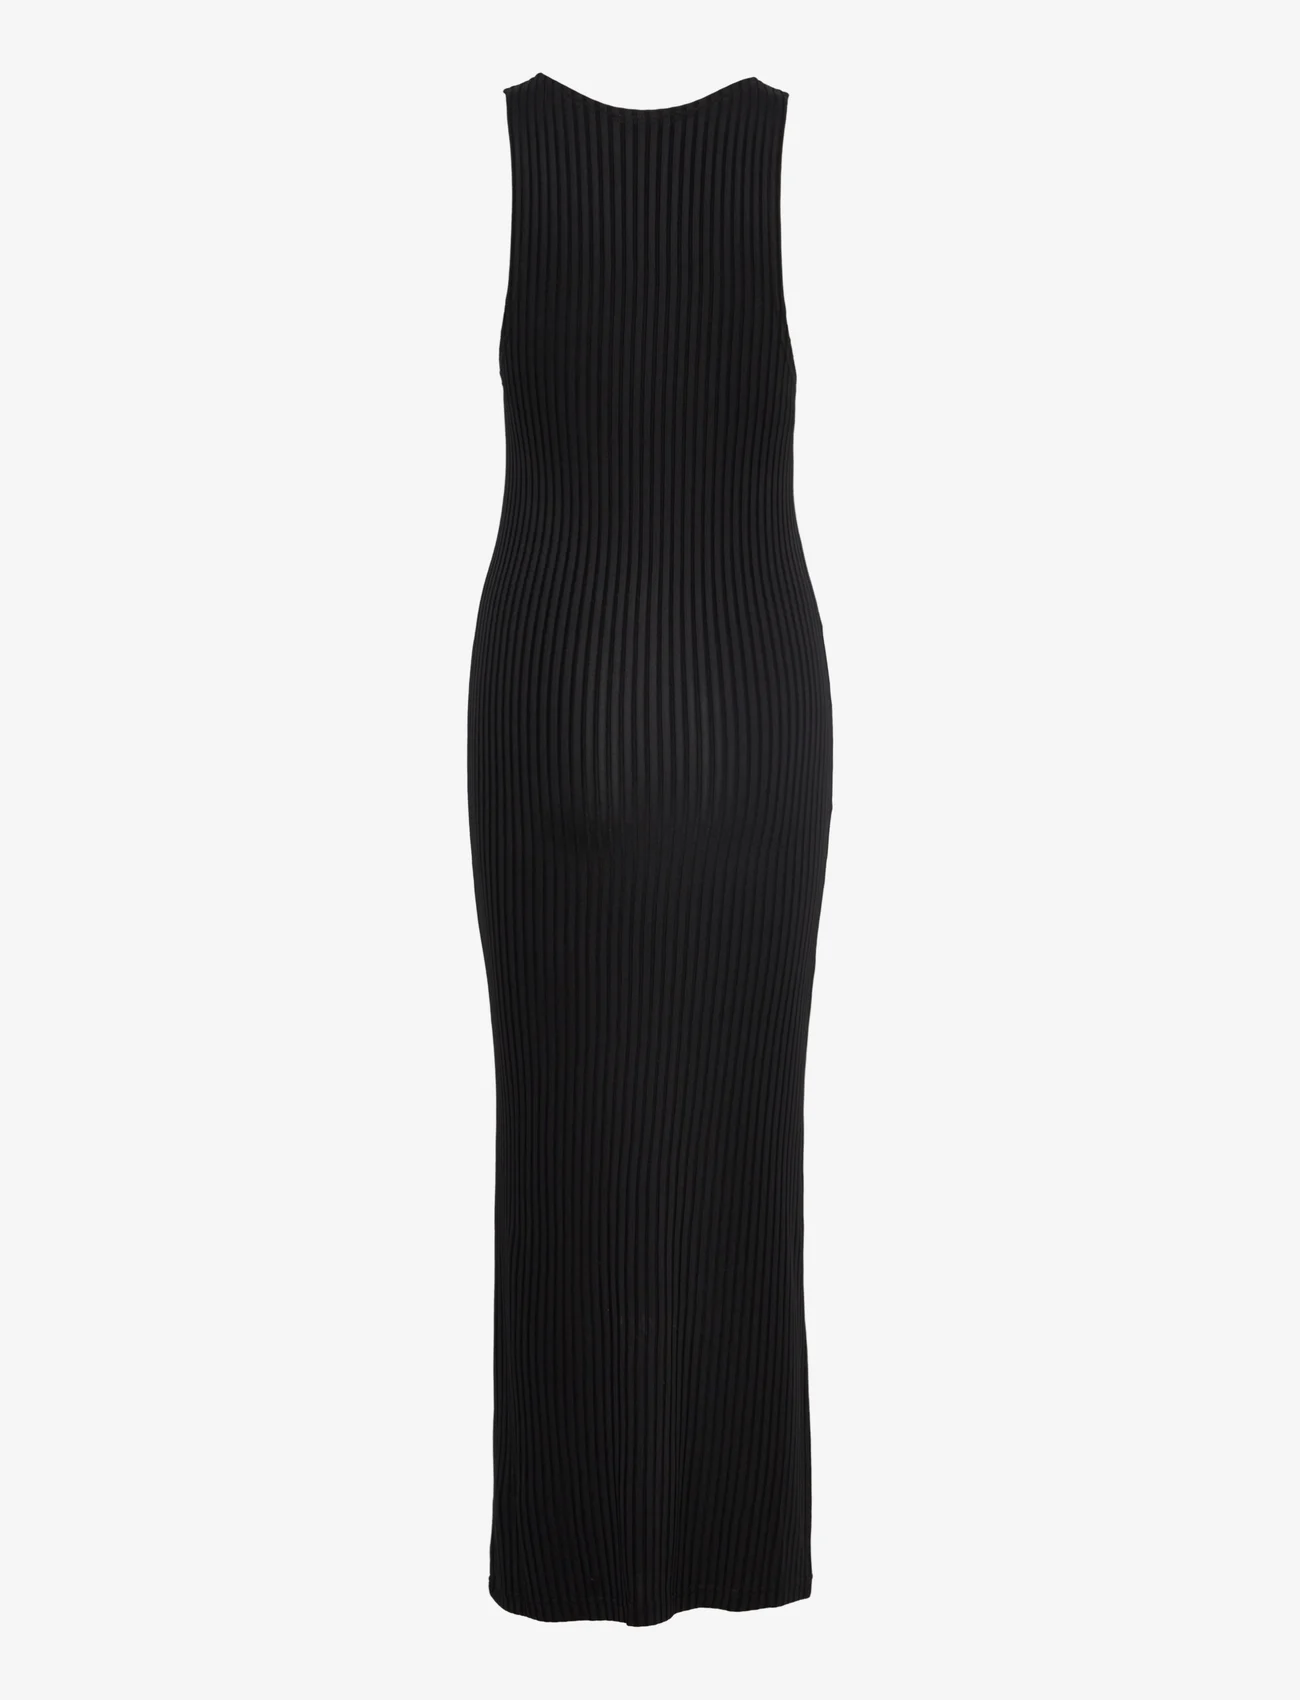 LEBRAND - Baia dress - maxi sukienki - black - 1